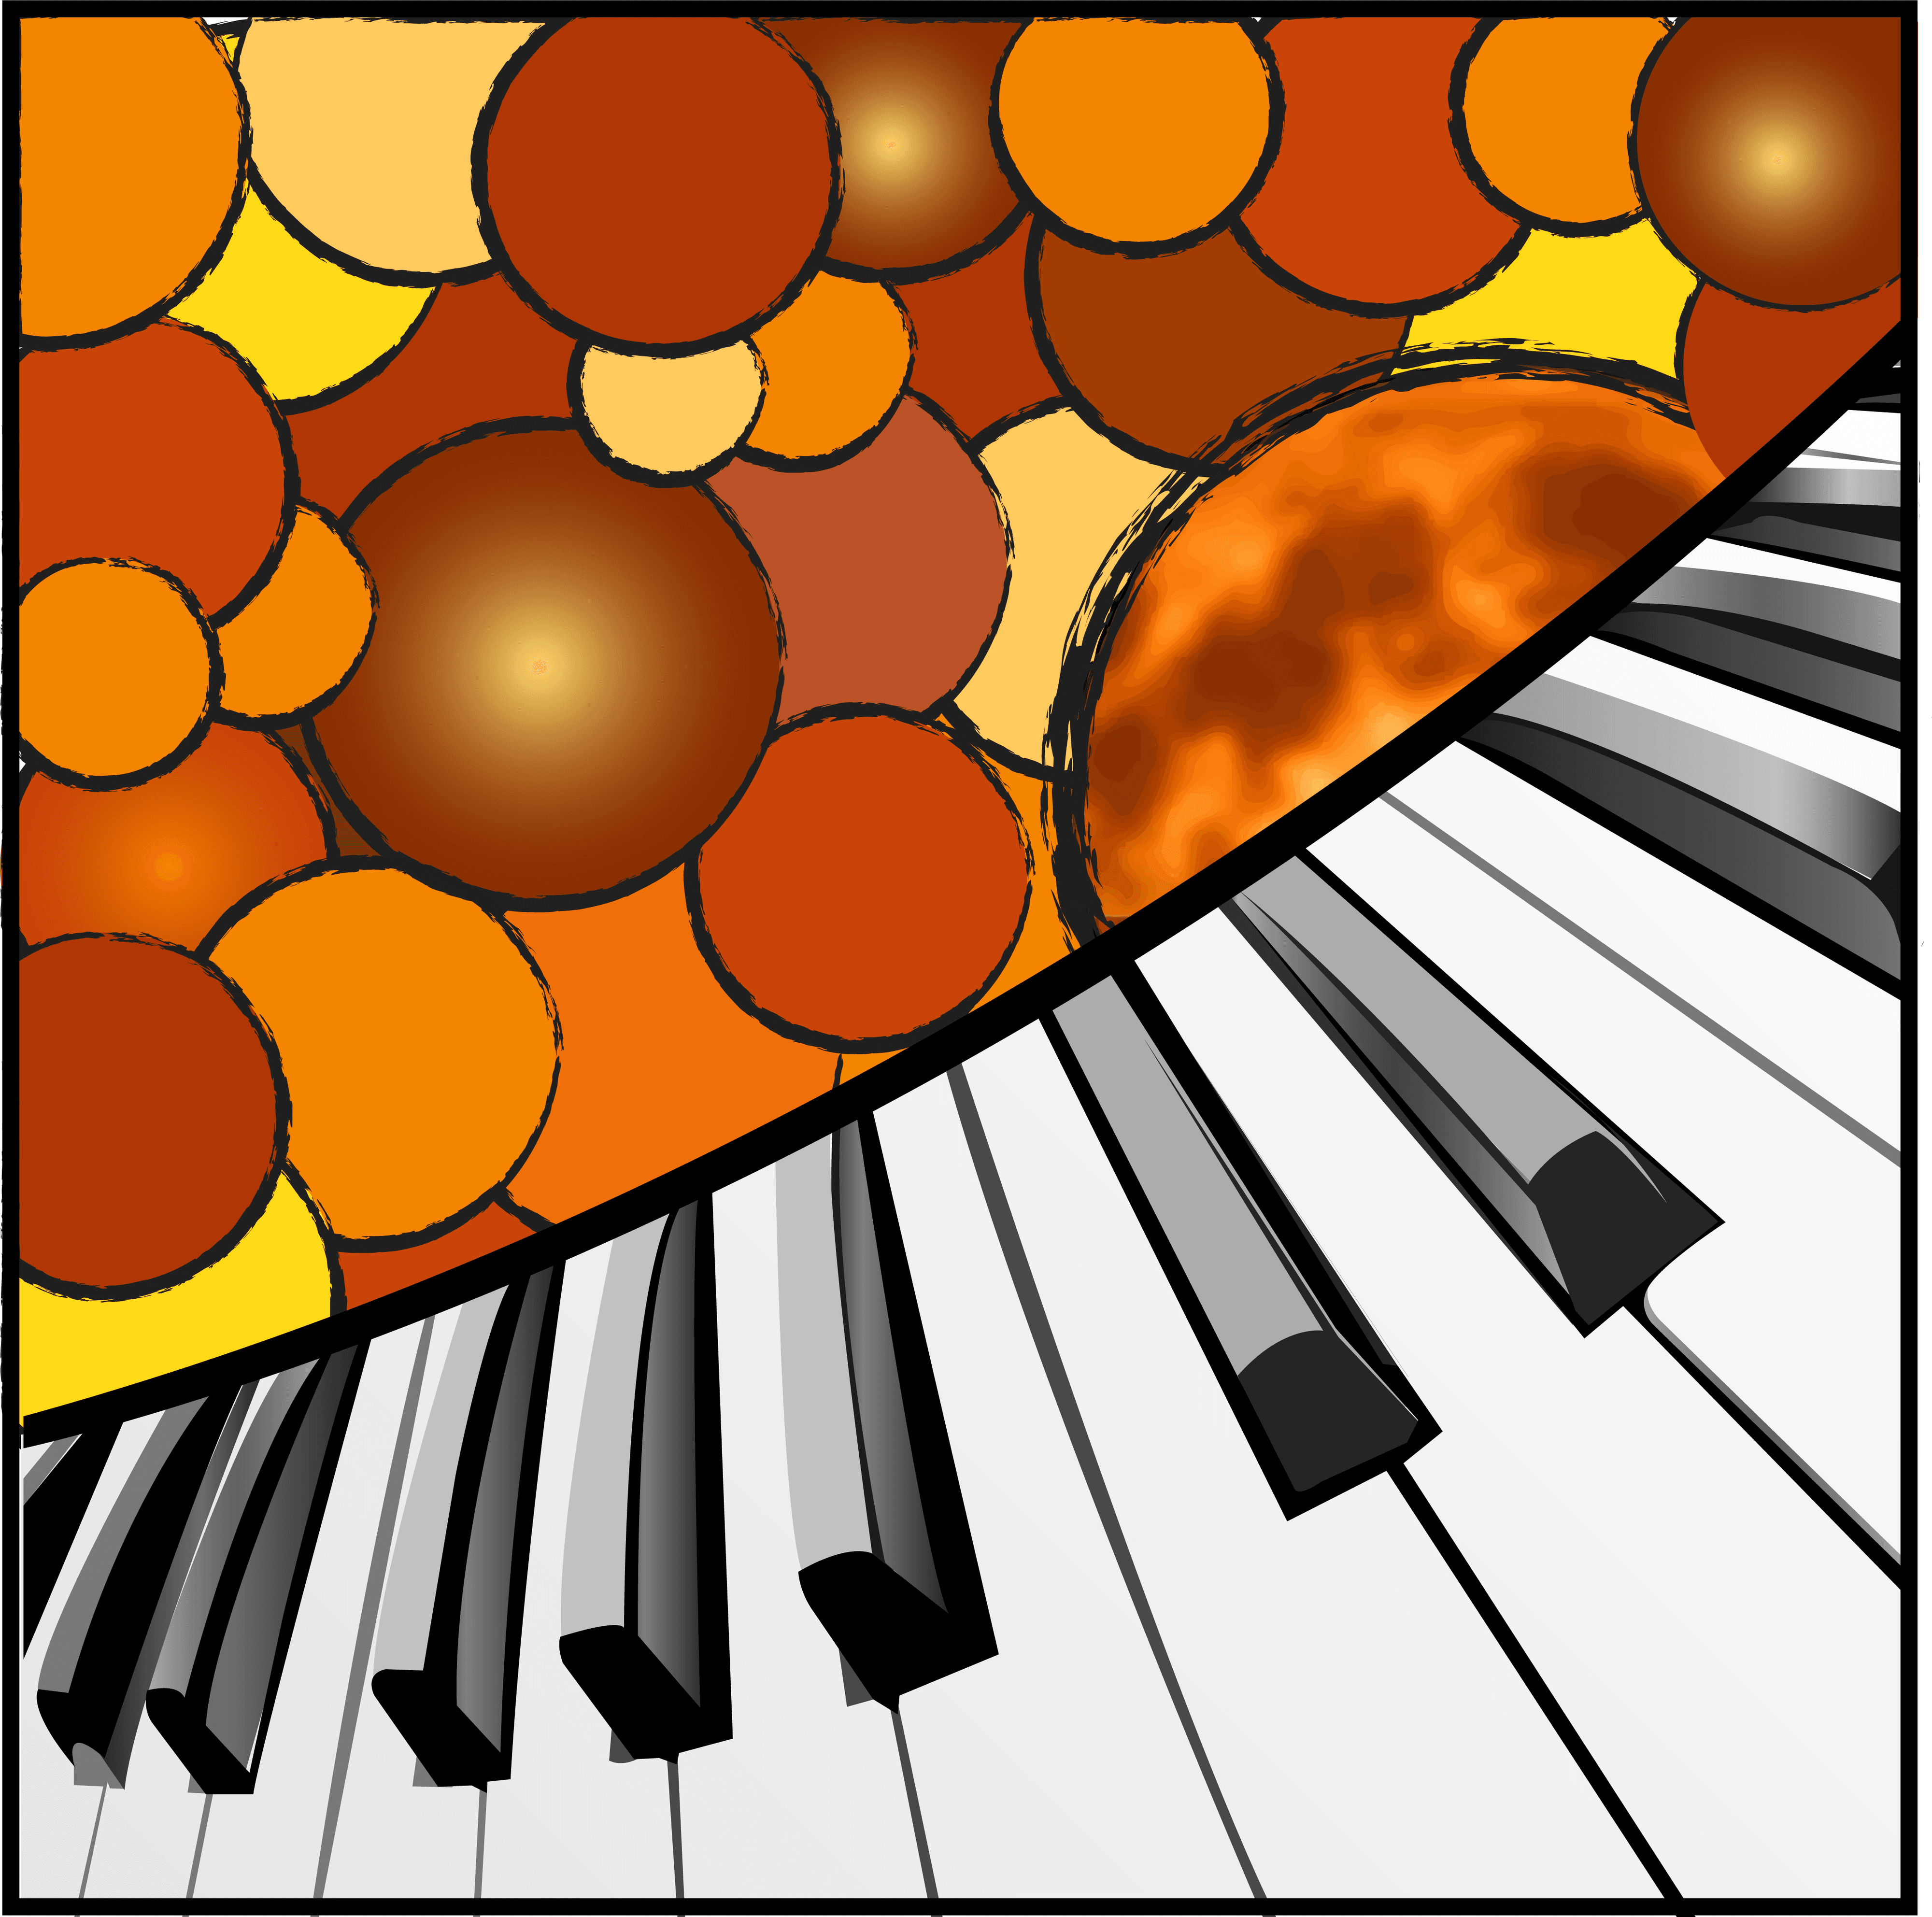 Orbs and Piano Keys